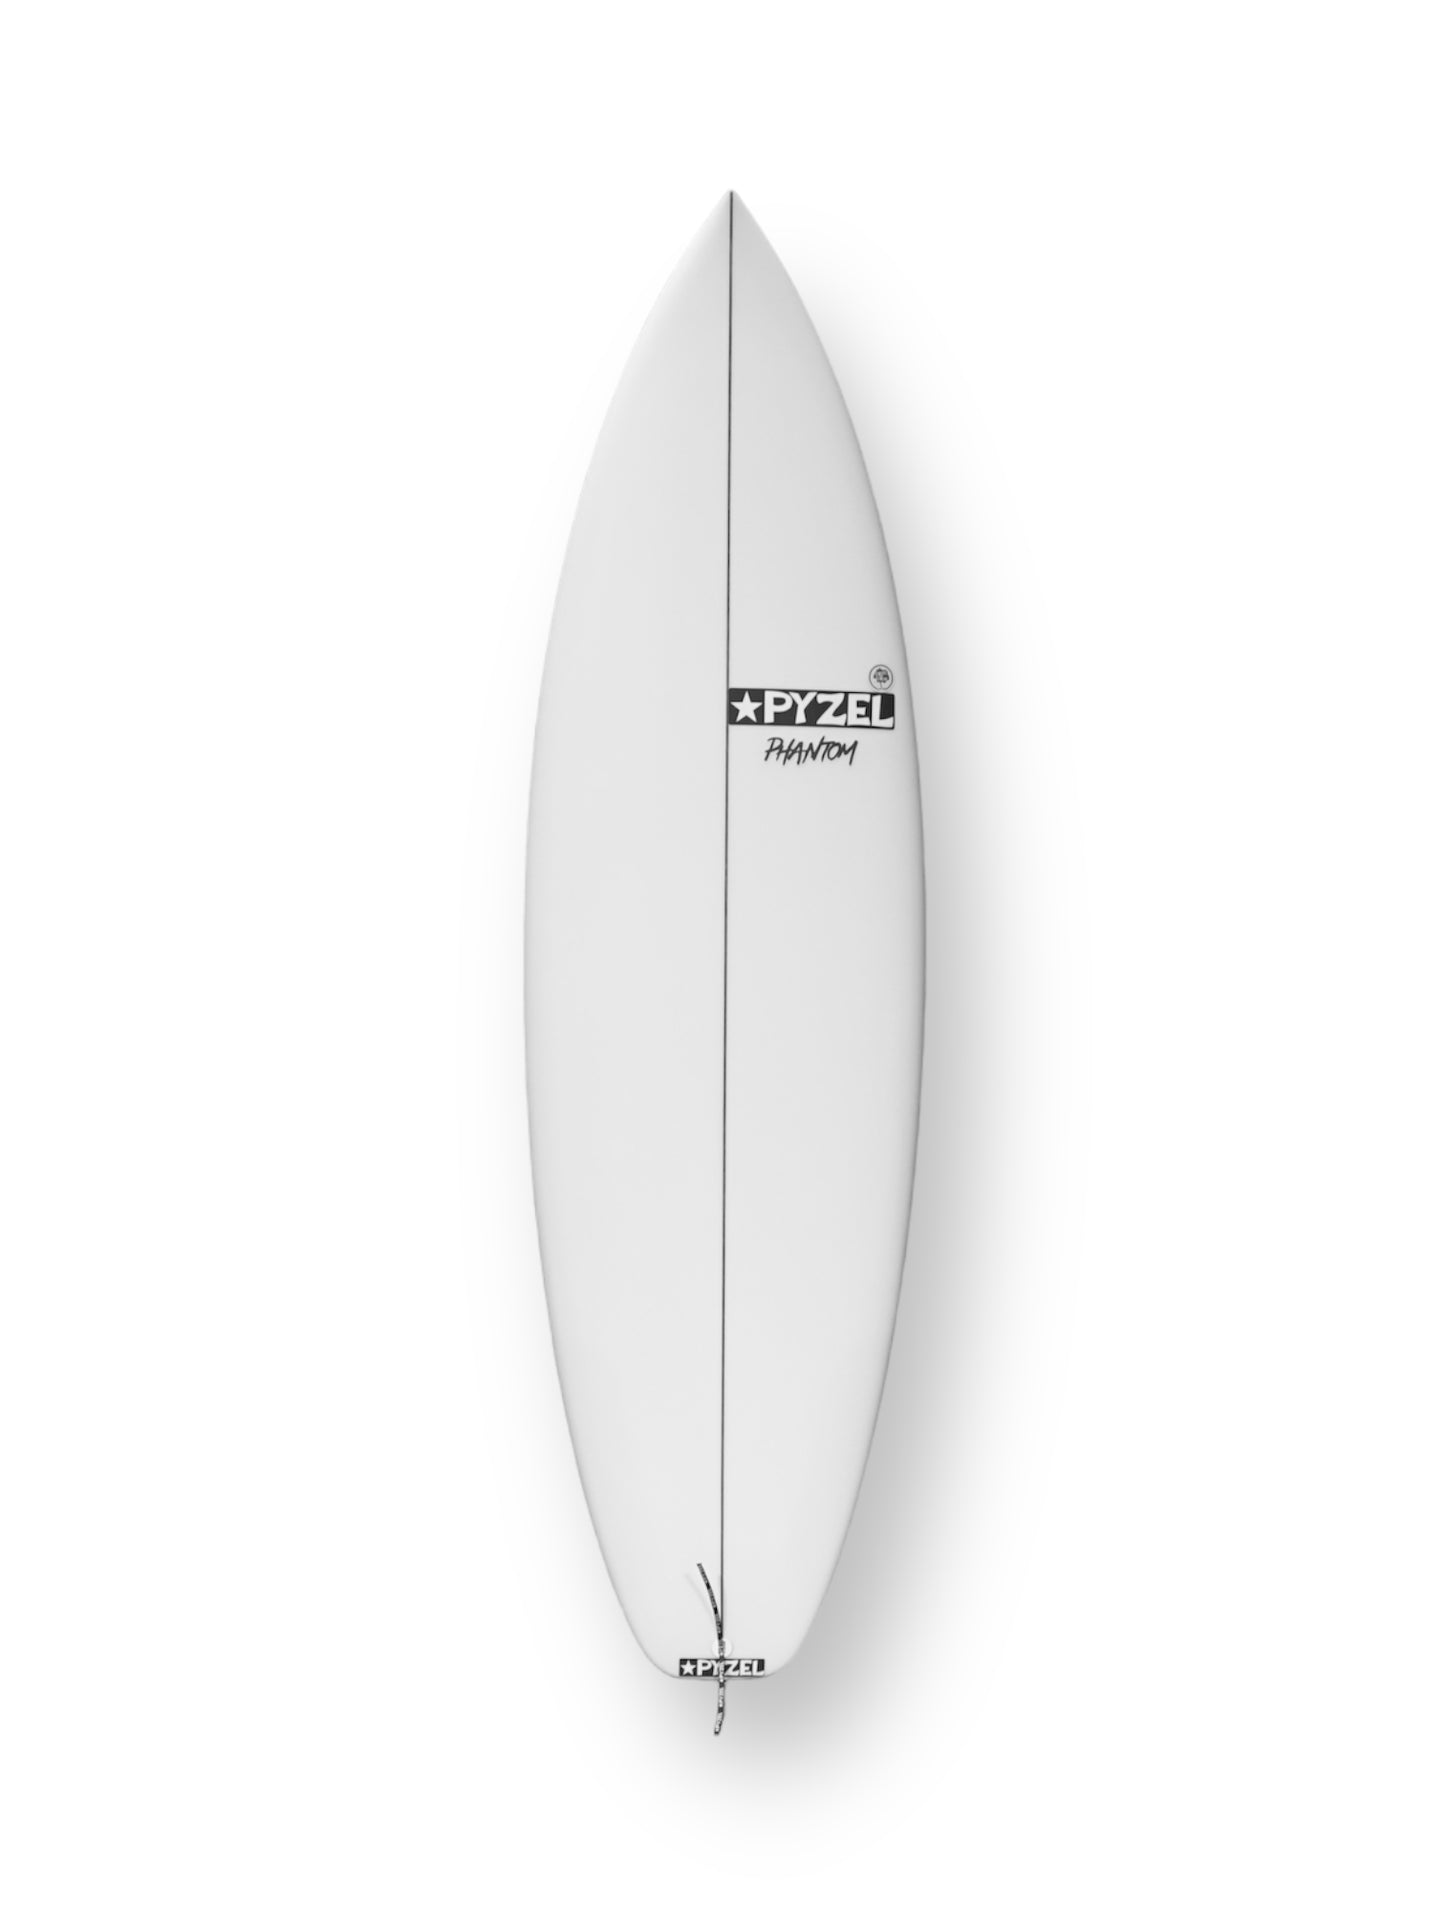 PYZEL PHANTOM XL 6'4" SURFBOARD